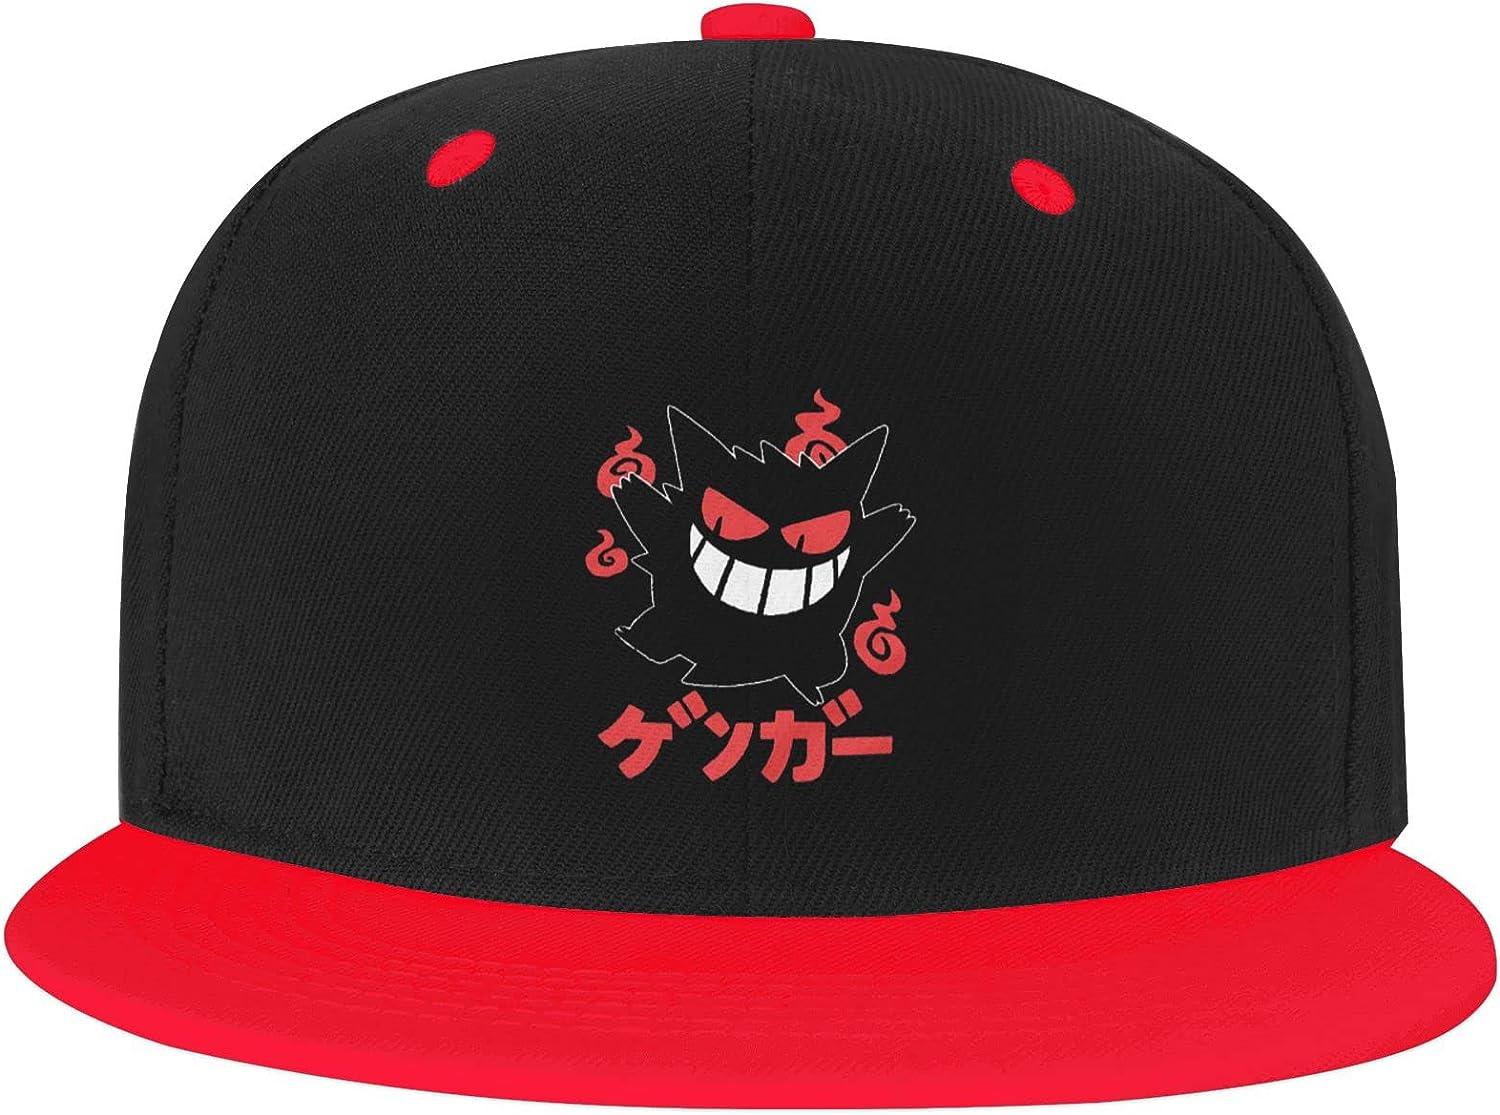 Unisex Adjustable Baseball Cap Classic Snapback Hat Hip-Hop Baseball Cap  Cool Outdoor Sun Hats for Men Women 2 One Size